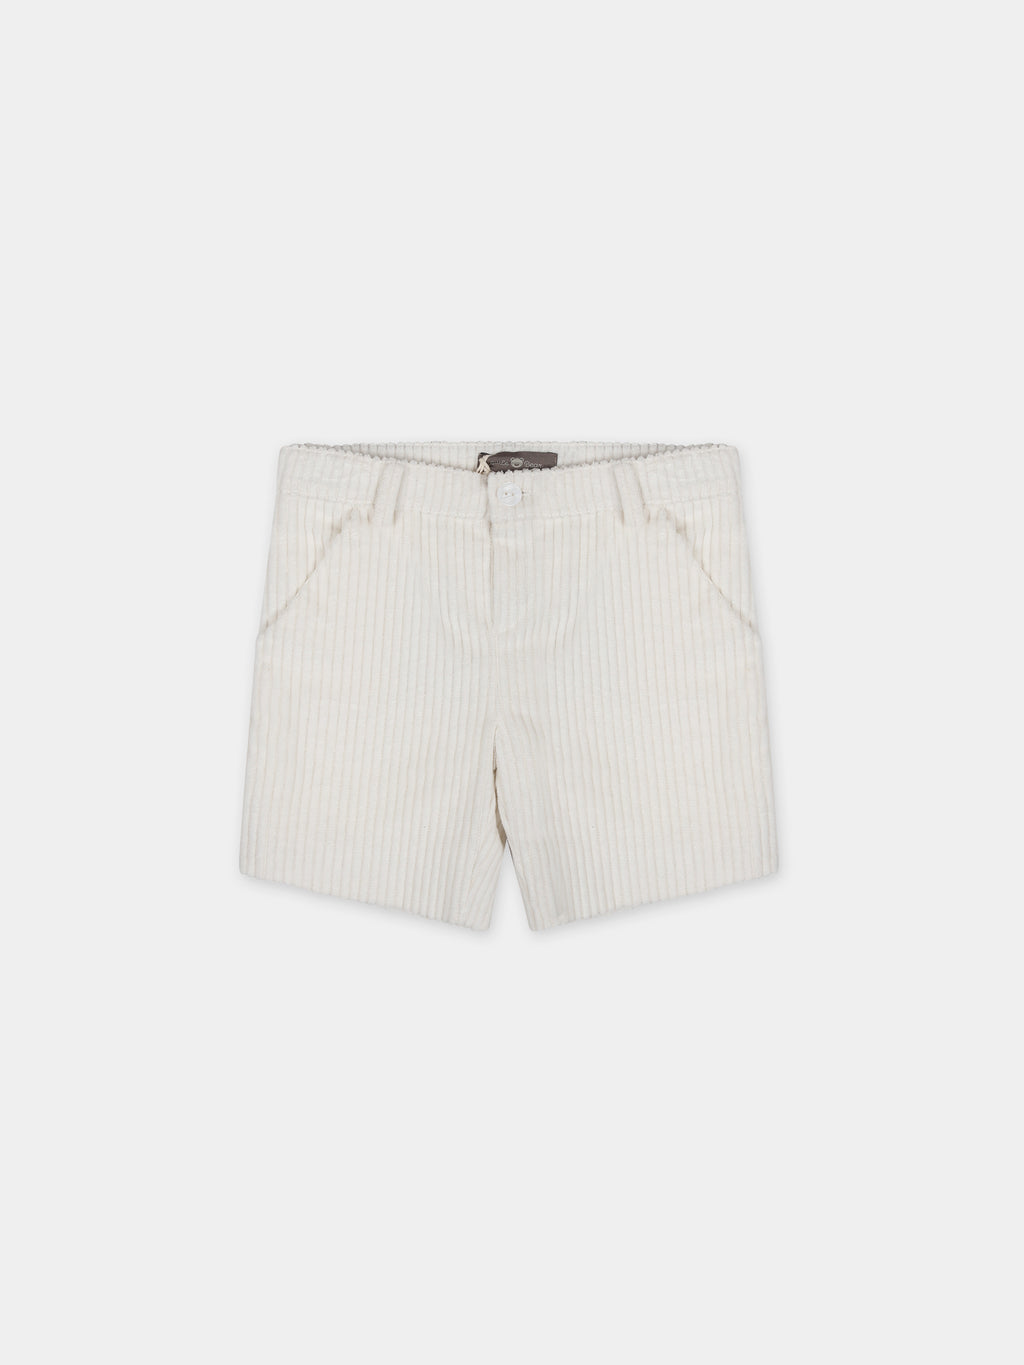 White shorts for baby boy